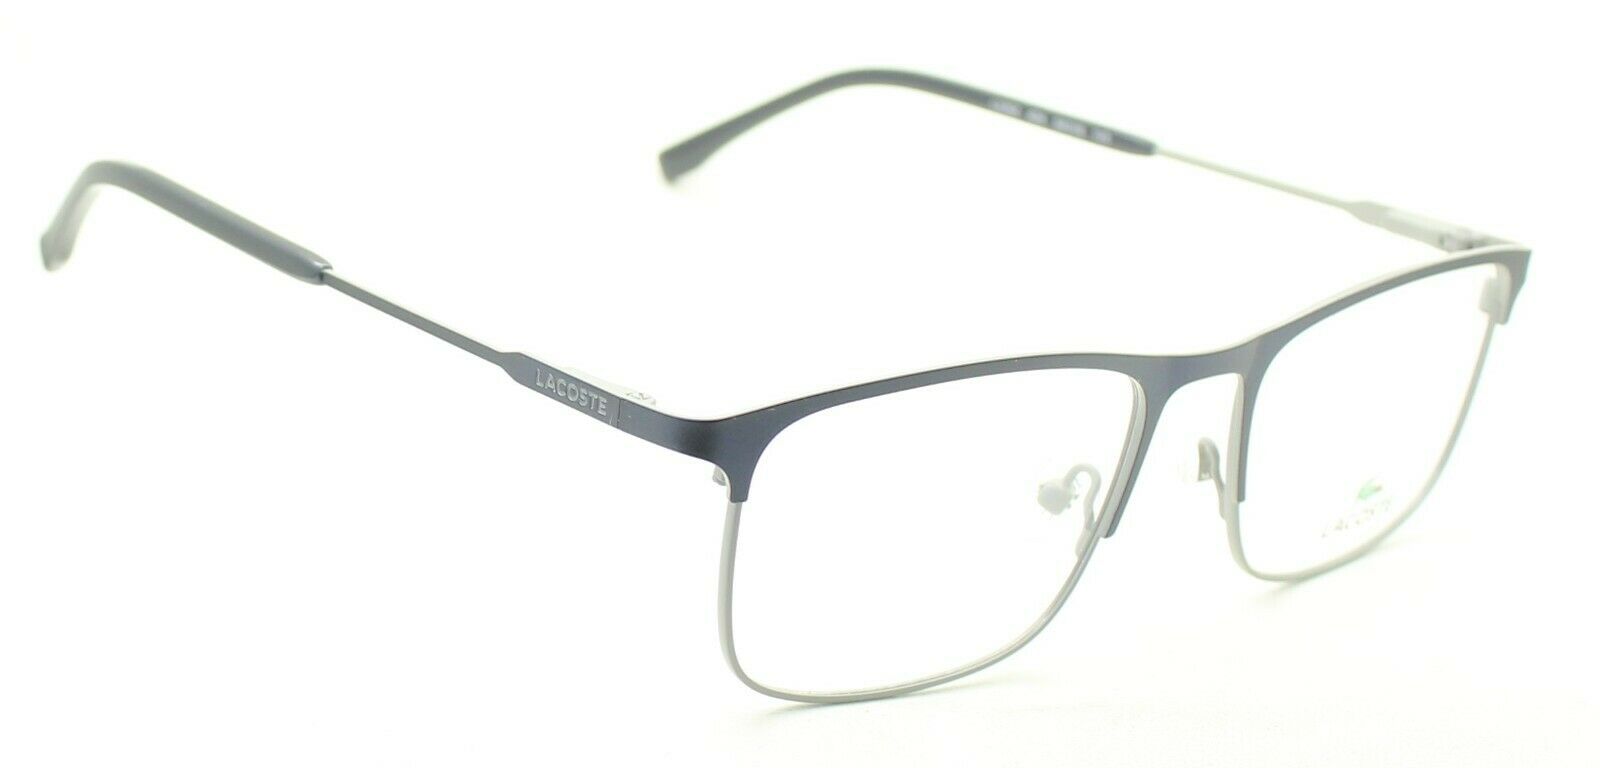 LACOSTE L2252 424 54mm RX Optical Eyewear FRAMES Glasses Eyeglasses New -TRUSTED